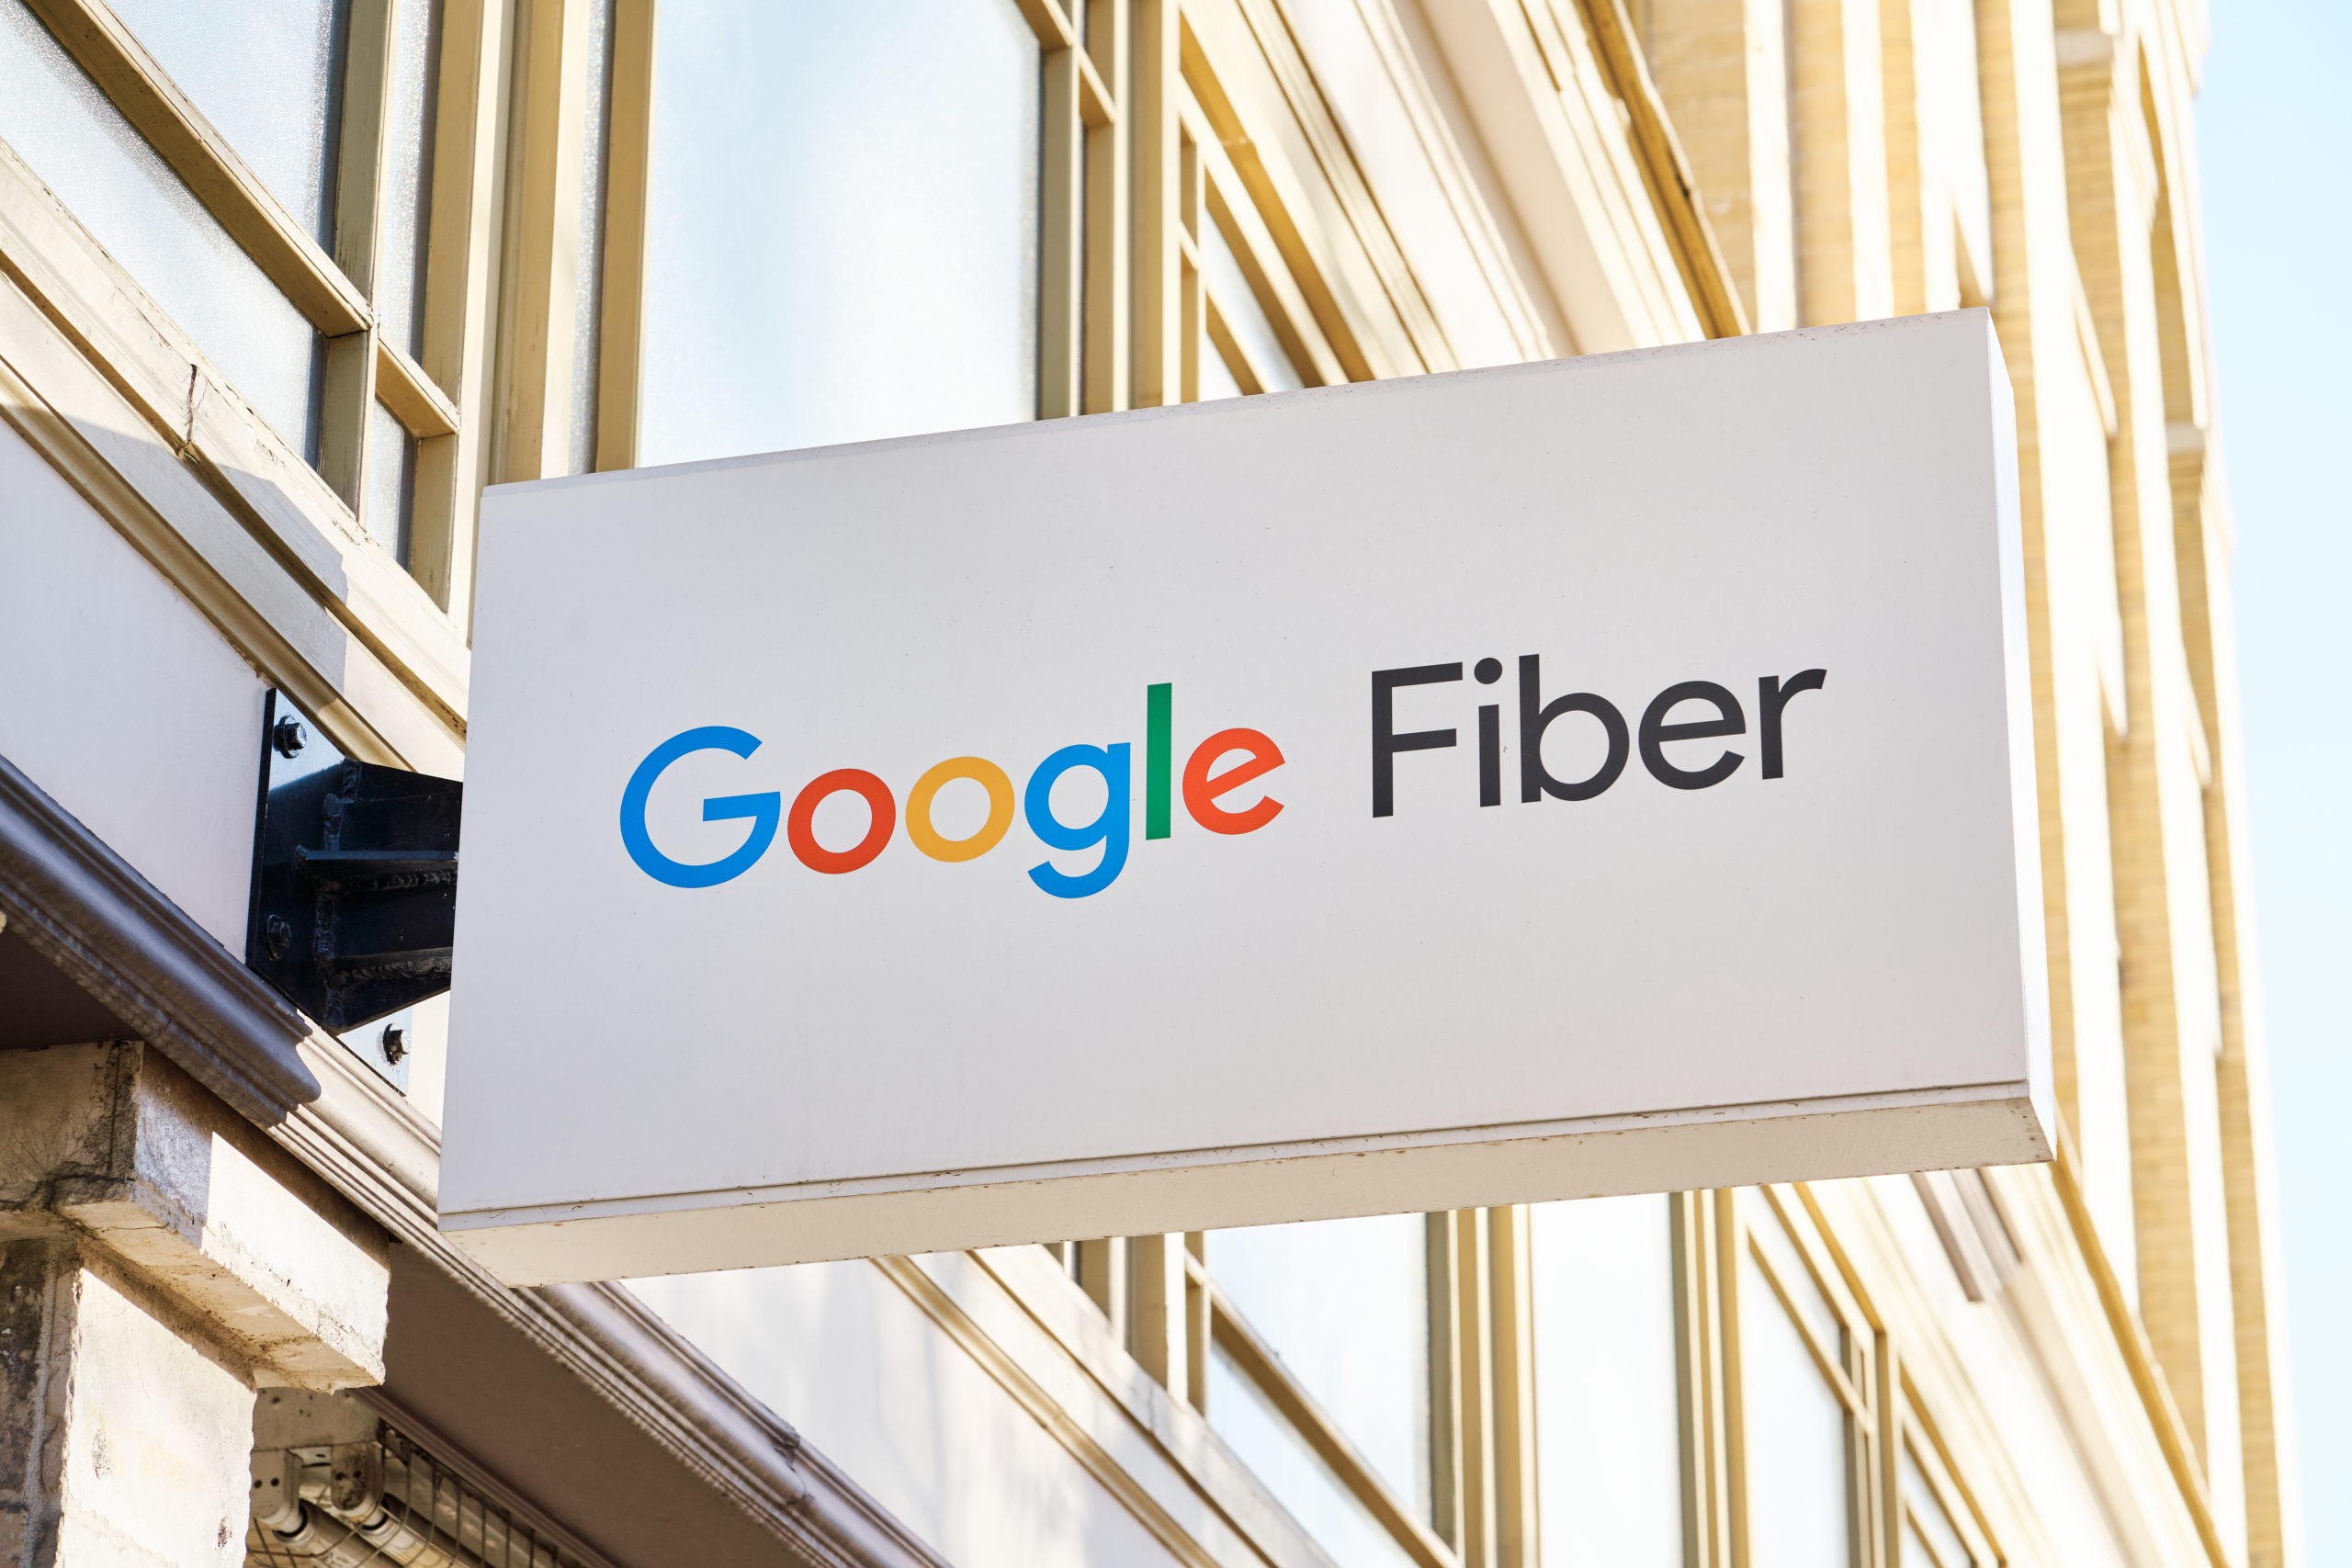 Google Fiber and Provo City negotiate new agreement